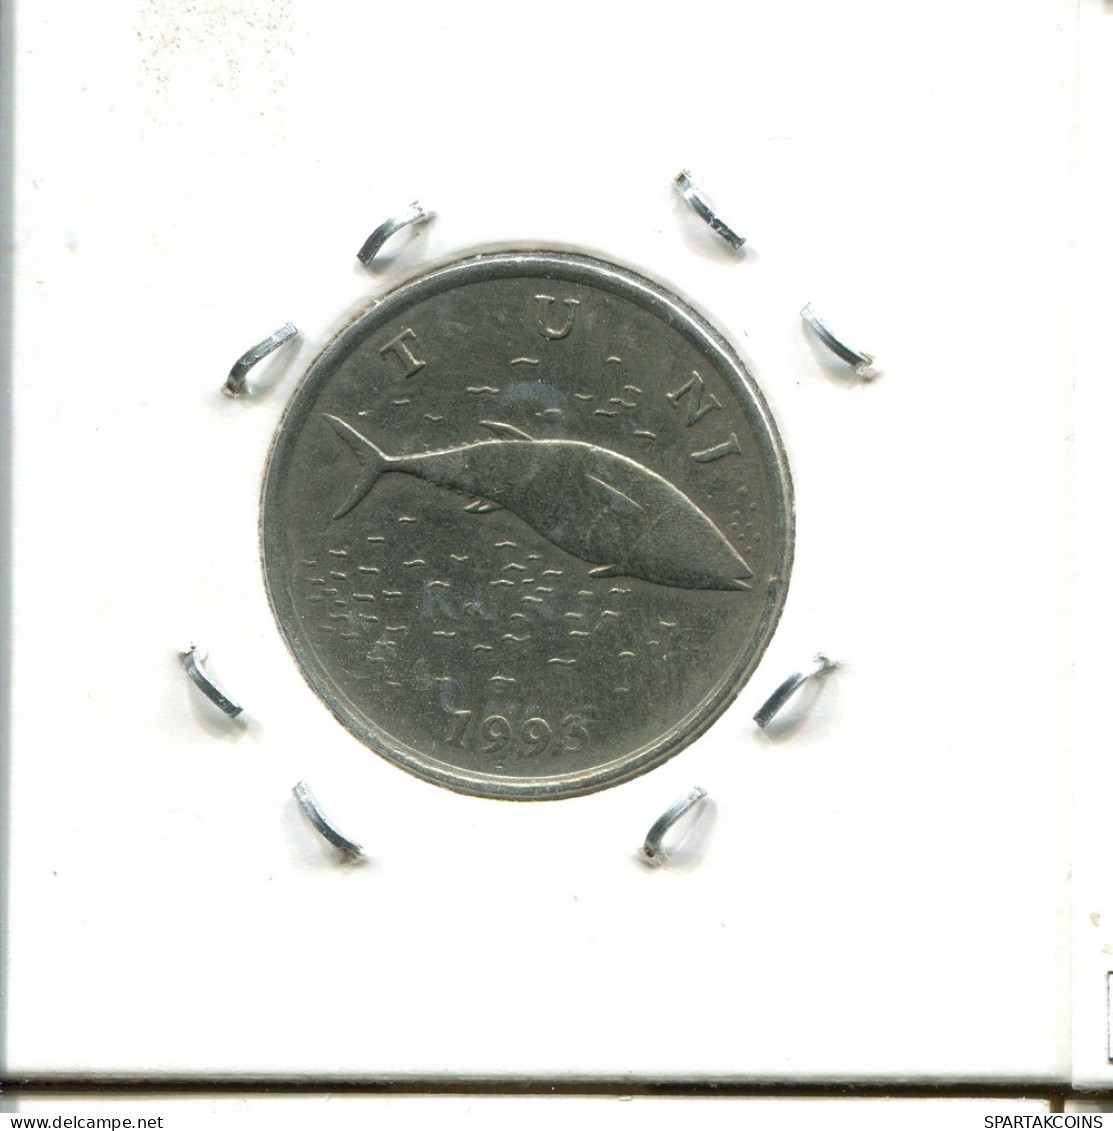 2 KUNE 1993 CROACIA CROATIA Moneda #AS562.E.A - Kroatien